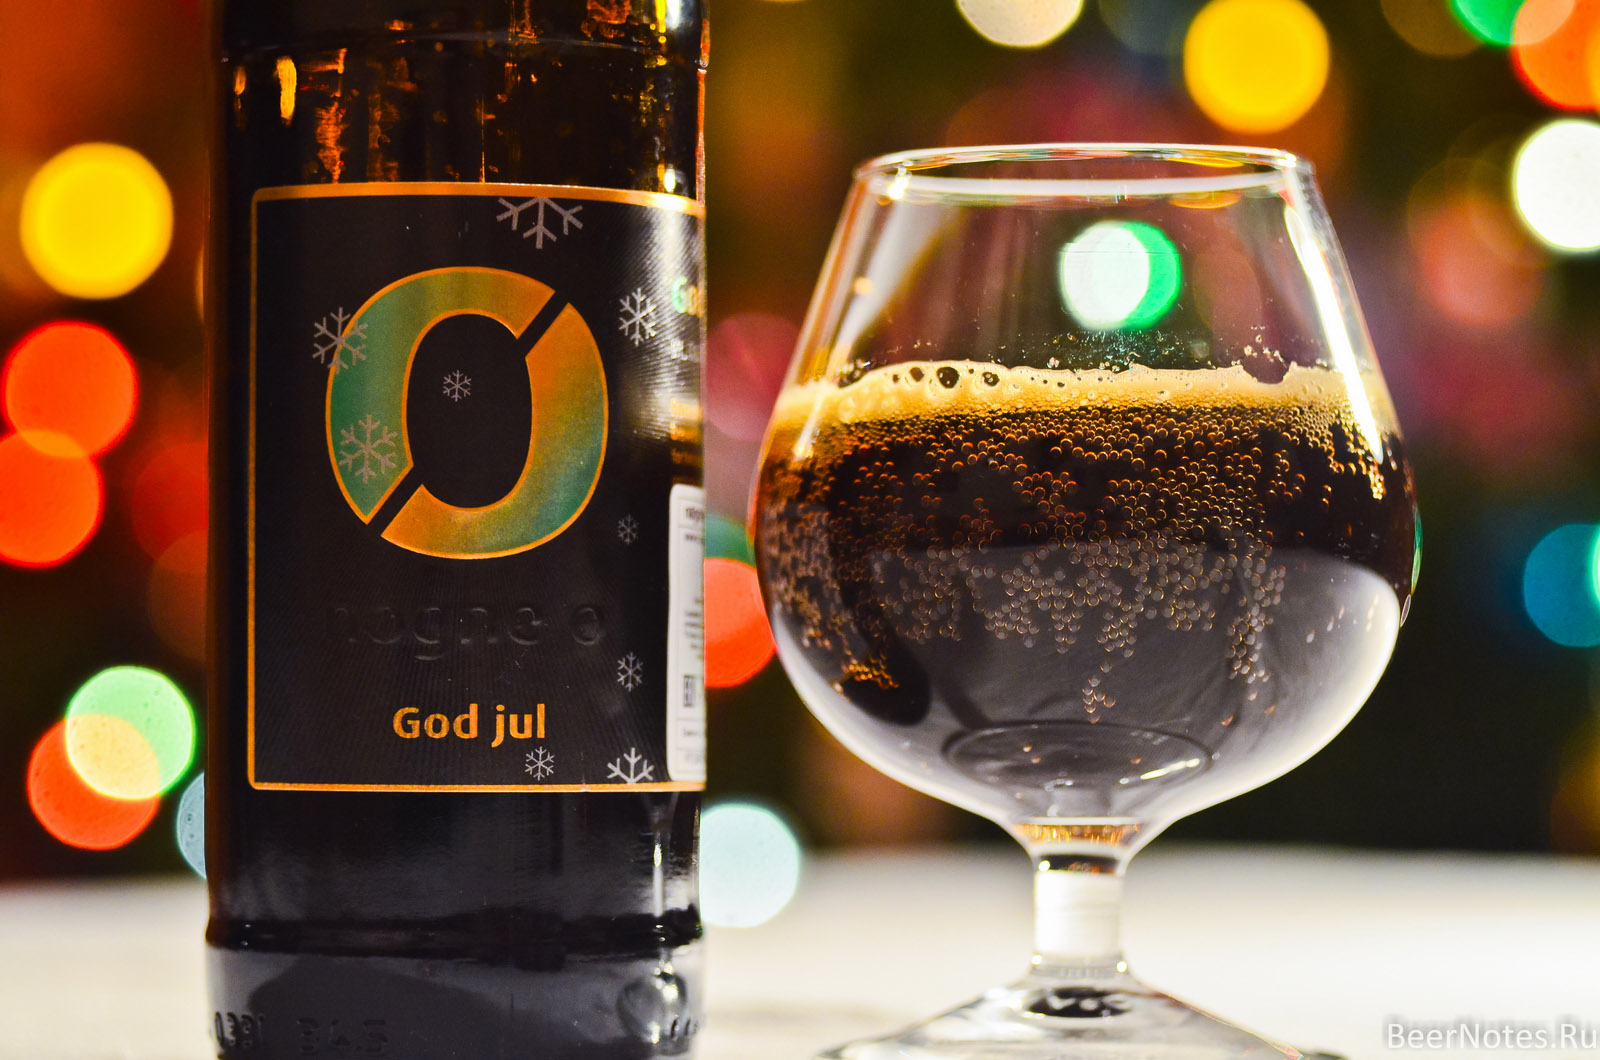 Nøgne Ø God Jul BA Whisky 2015-2